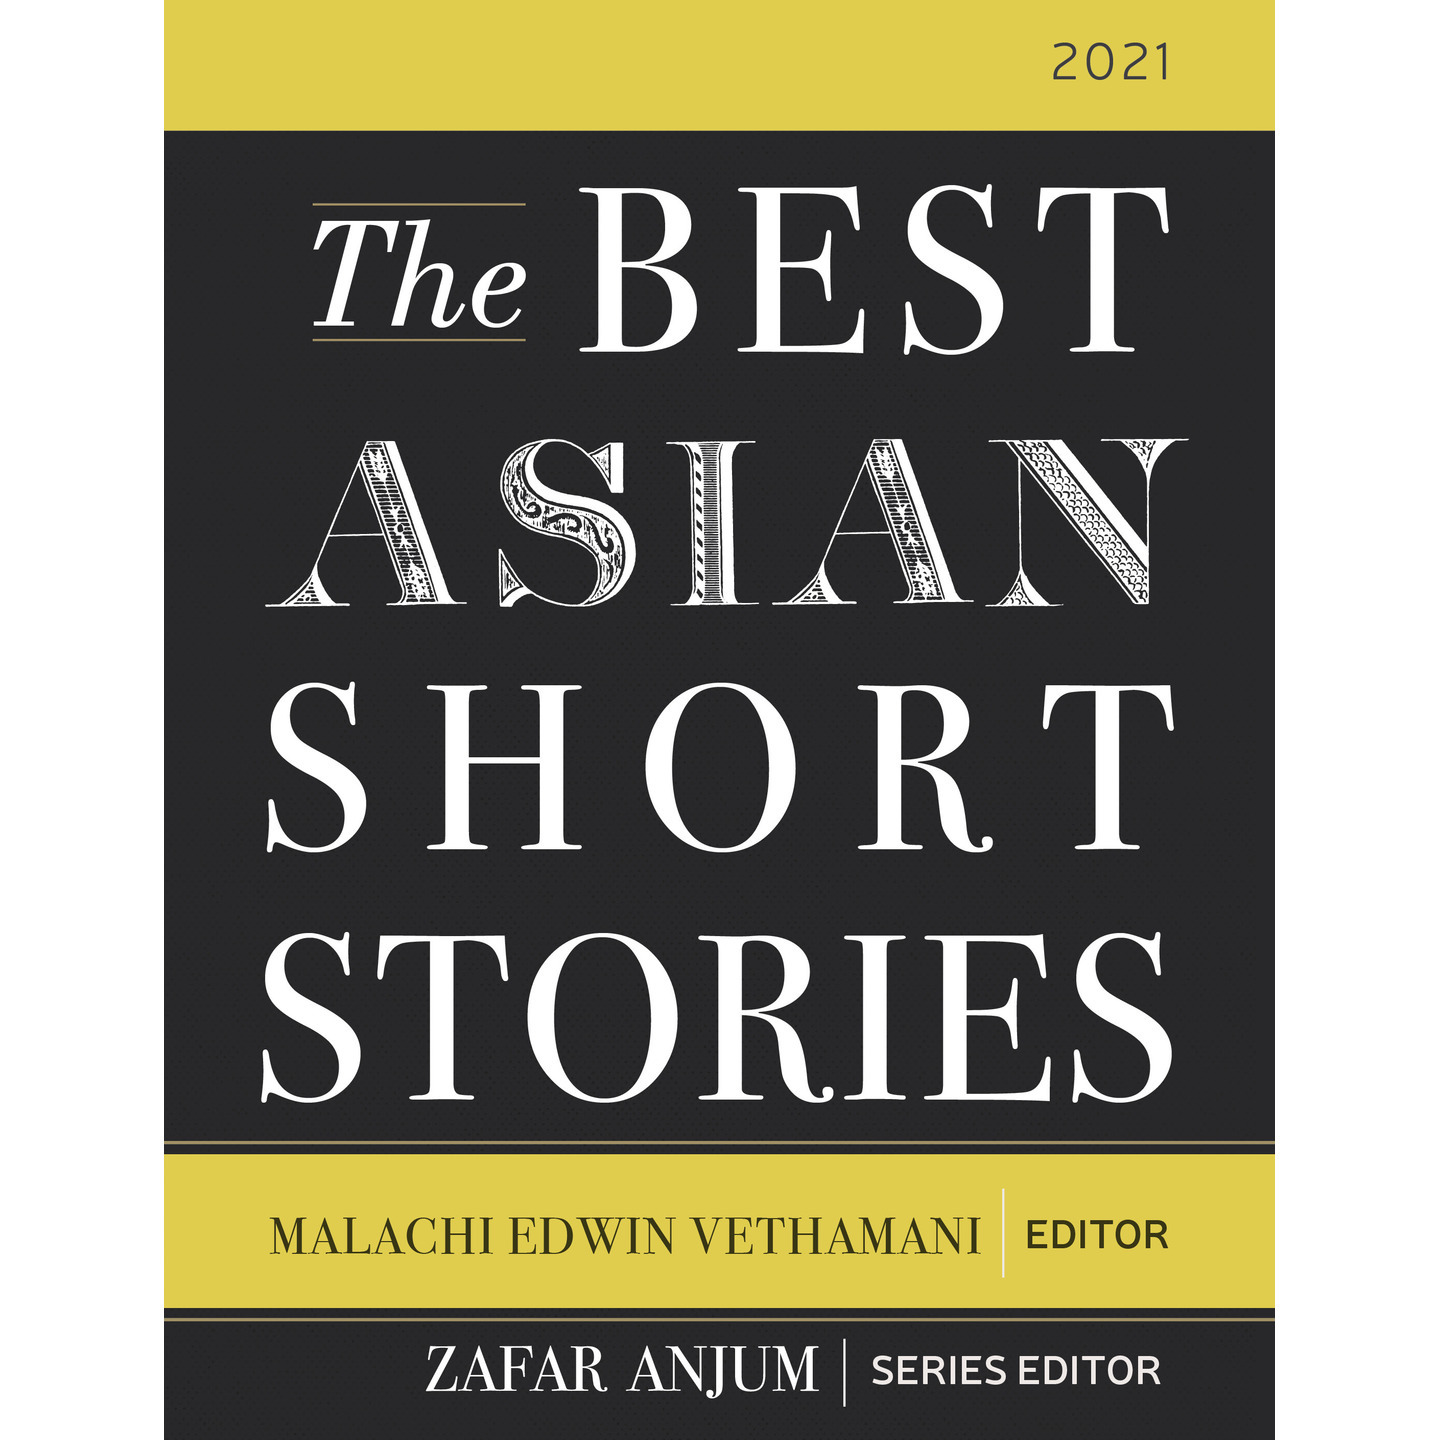 Pre-order The Best Asian Short Stories 2021